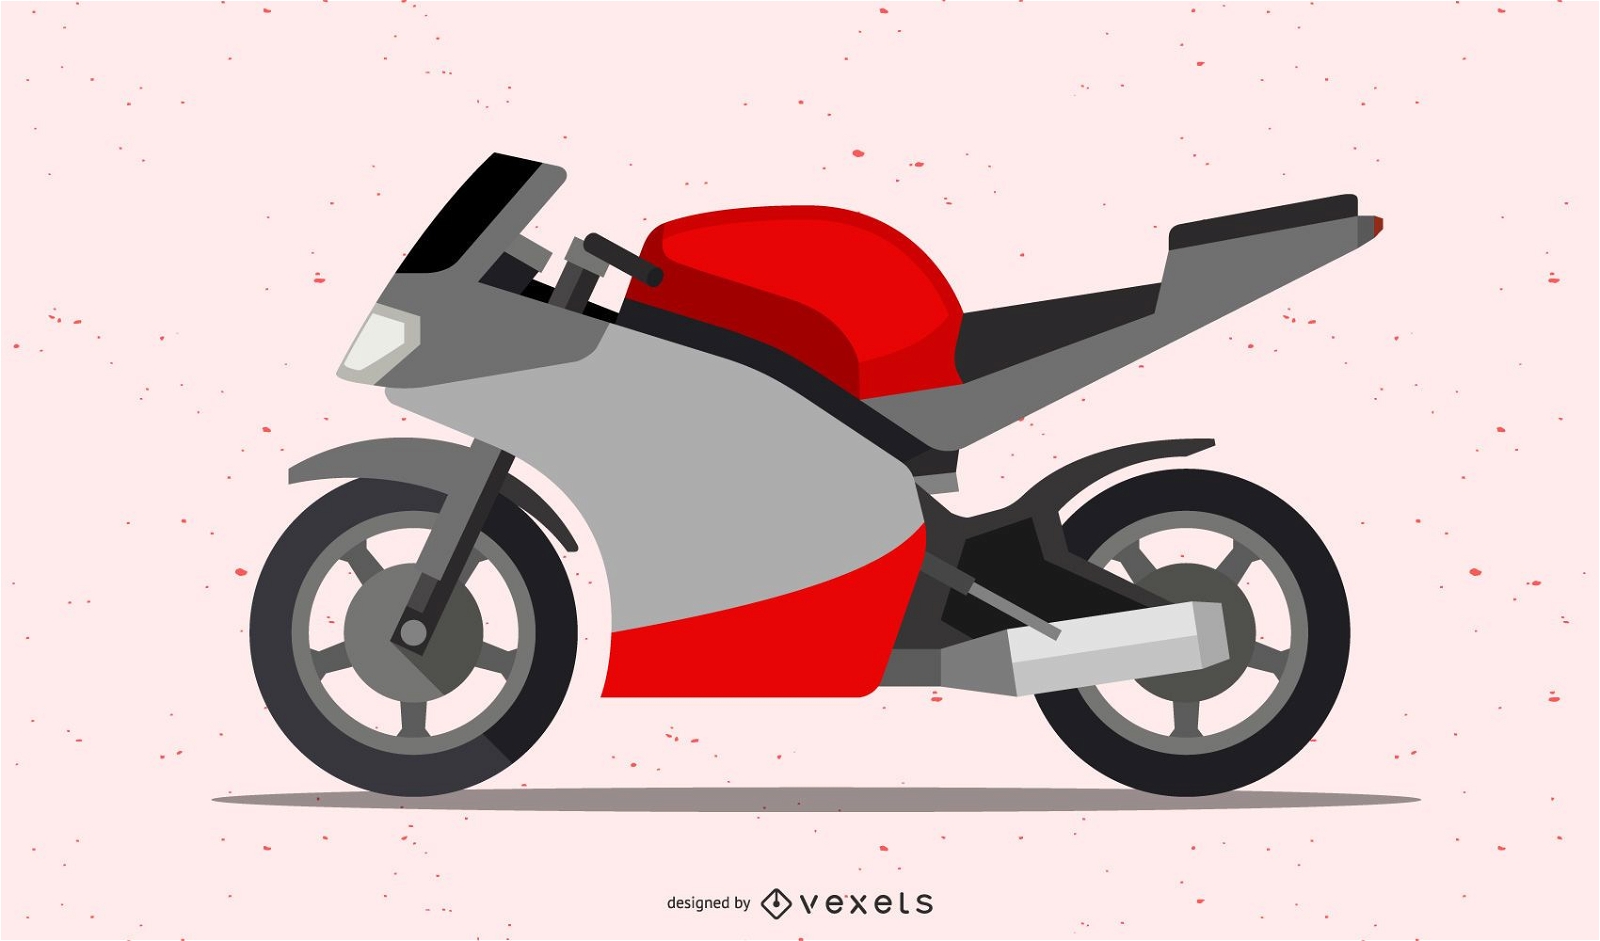 Ducati Diavel Motorcycle Vector